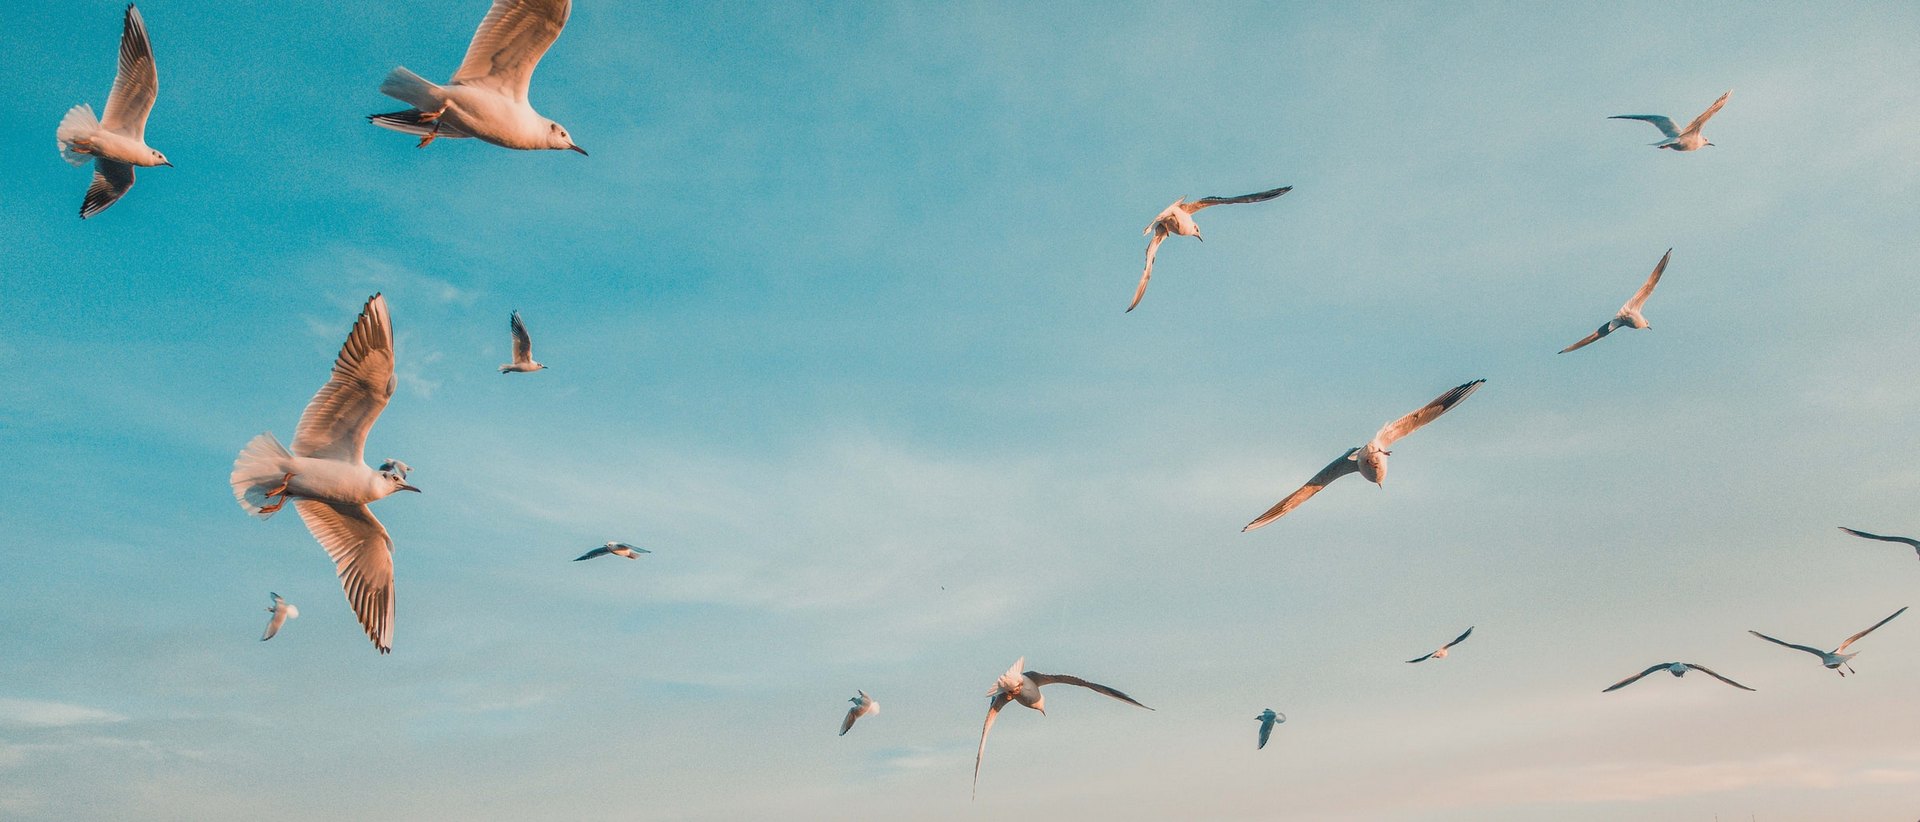 Flying birds. Photographer: Anthony Delanoix. Licensed. File ID: btQt9i0Krag